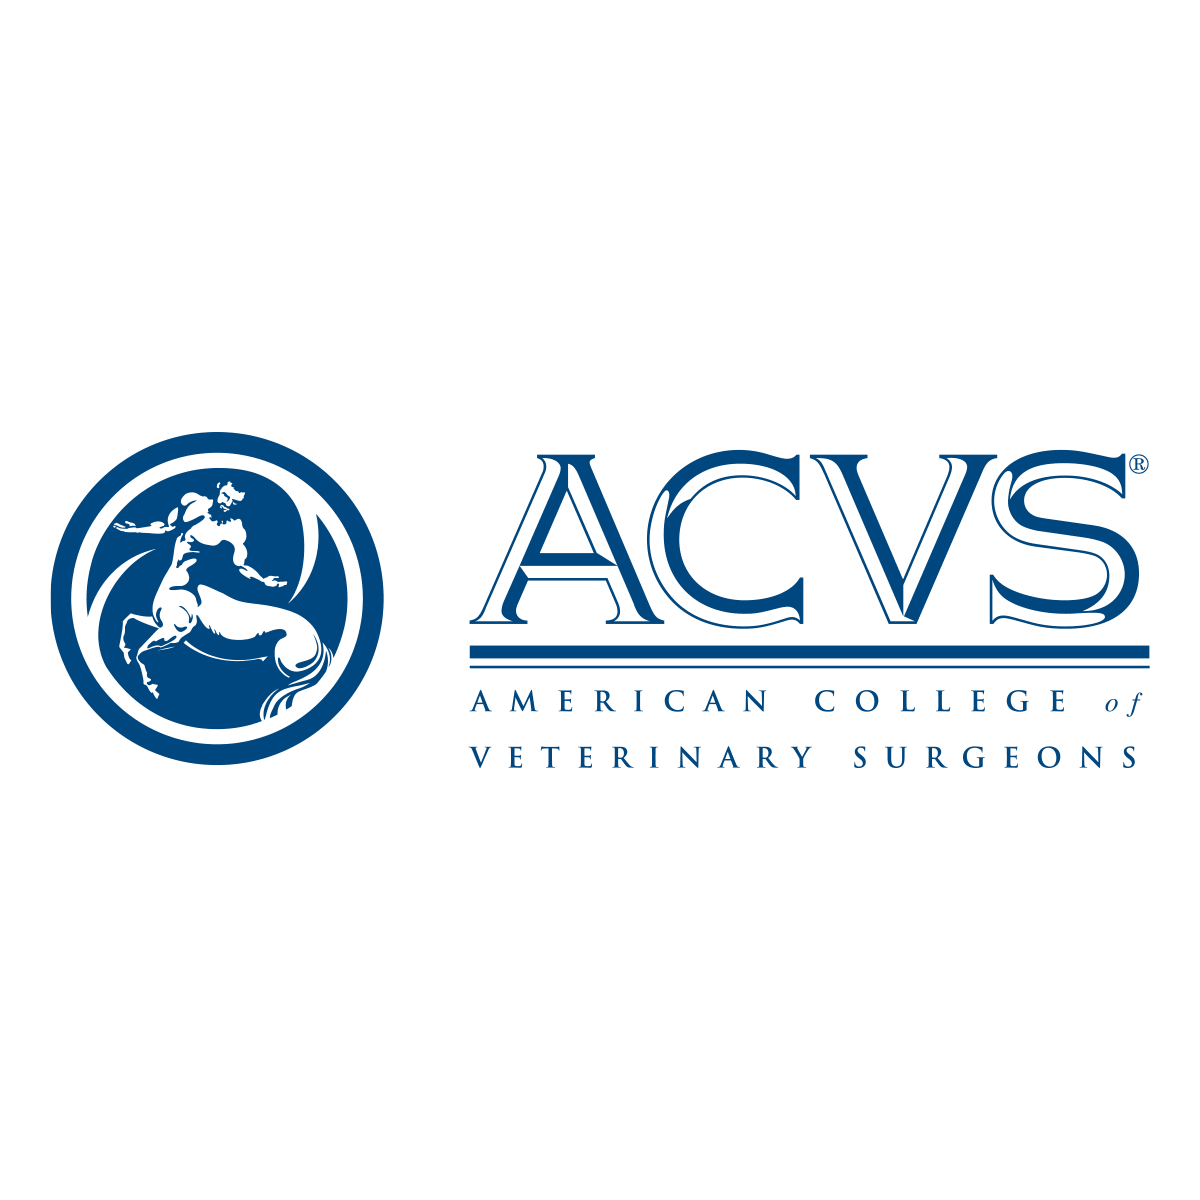 www.acvs.org